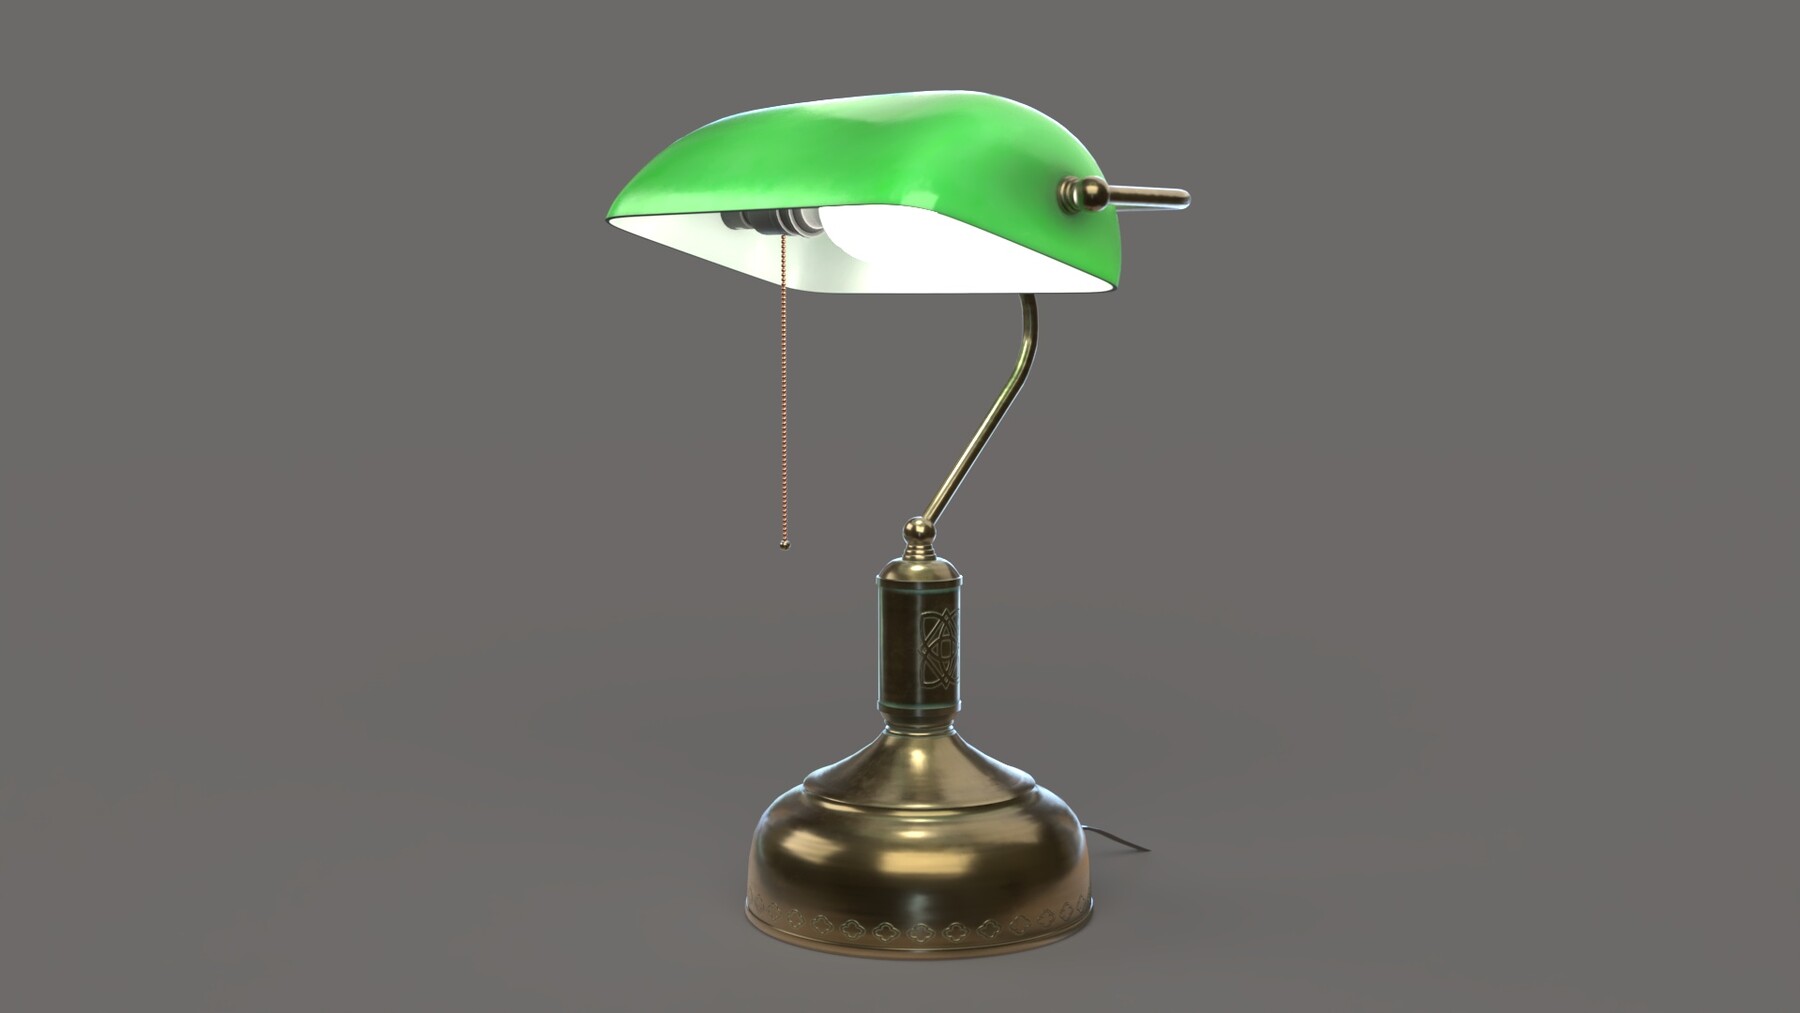 ArtStation - Old Green Banker's Lamp